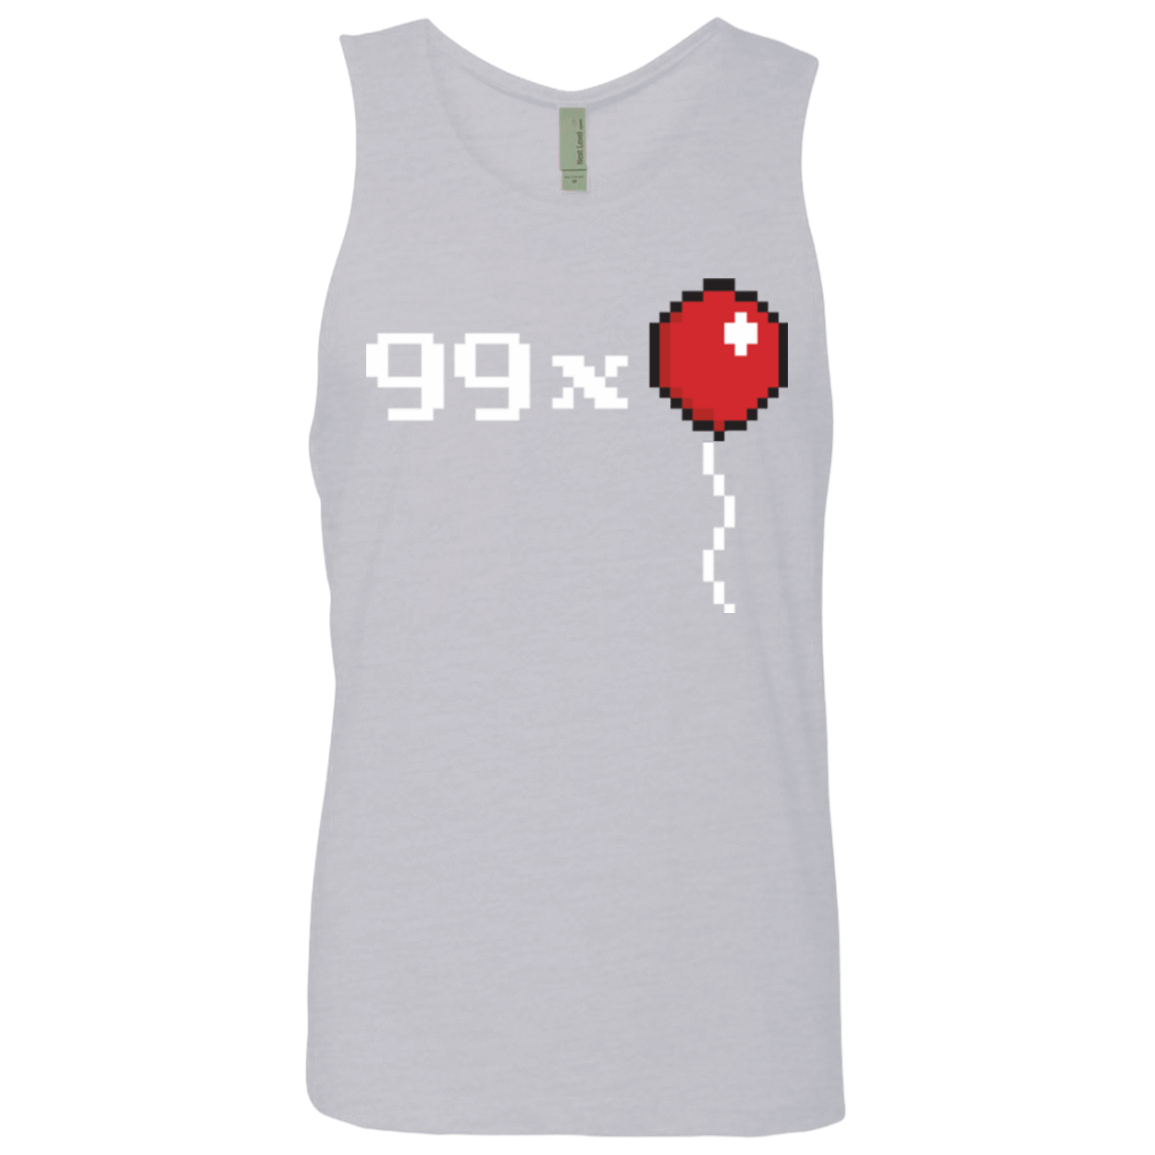 T-Shirts Heather Grey / Small 99x Balloon Men's Premium Tank Top